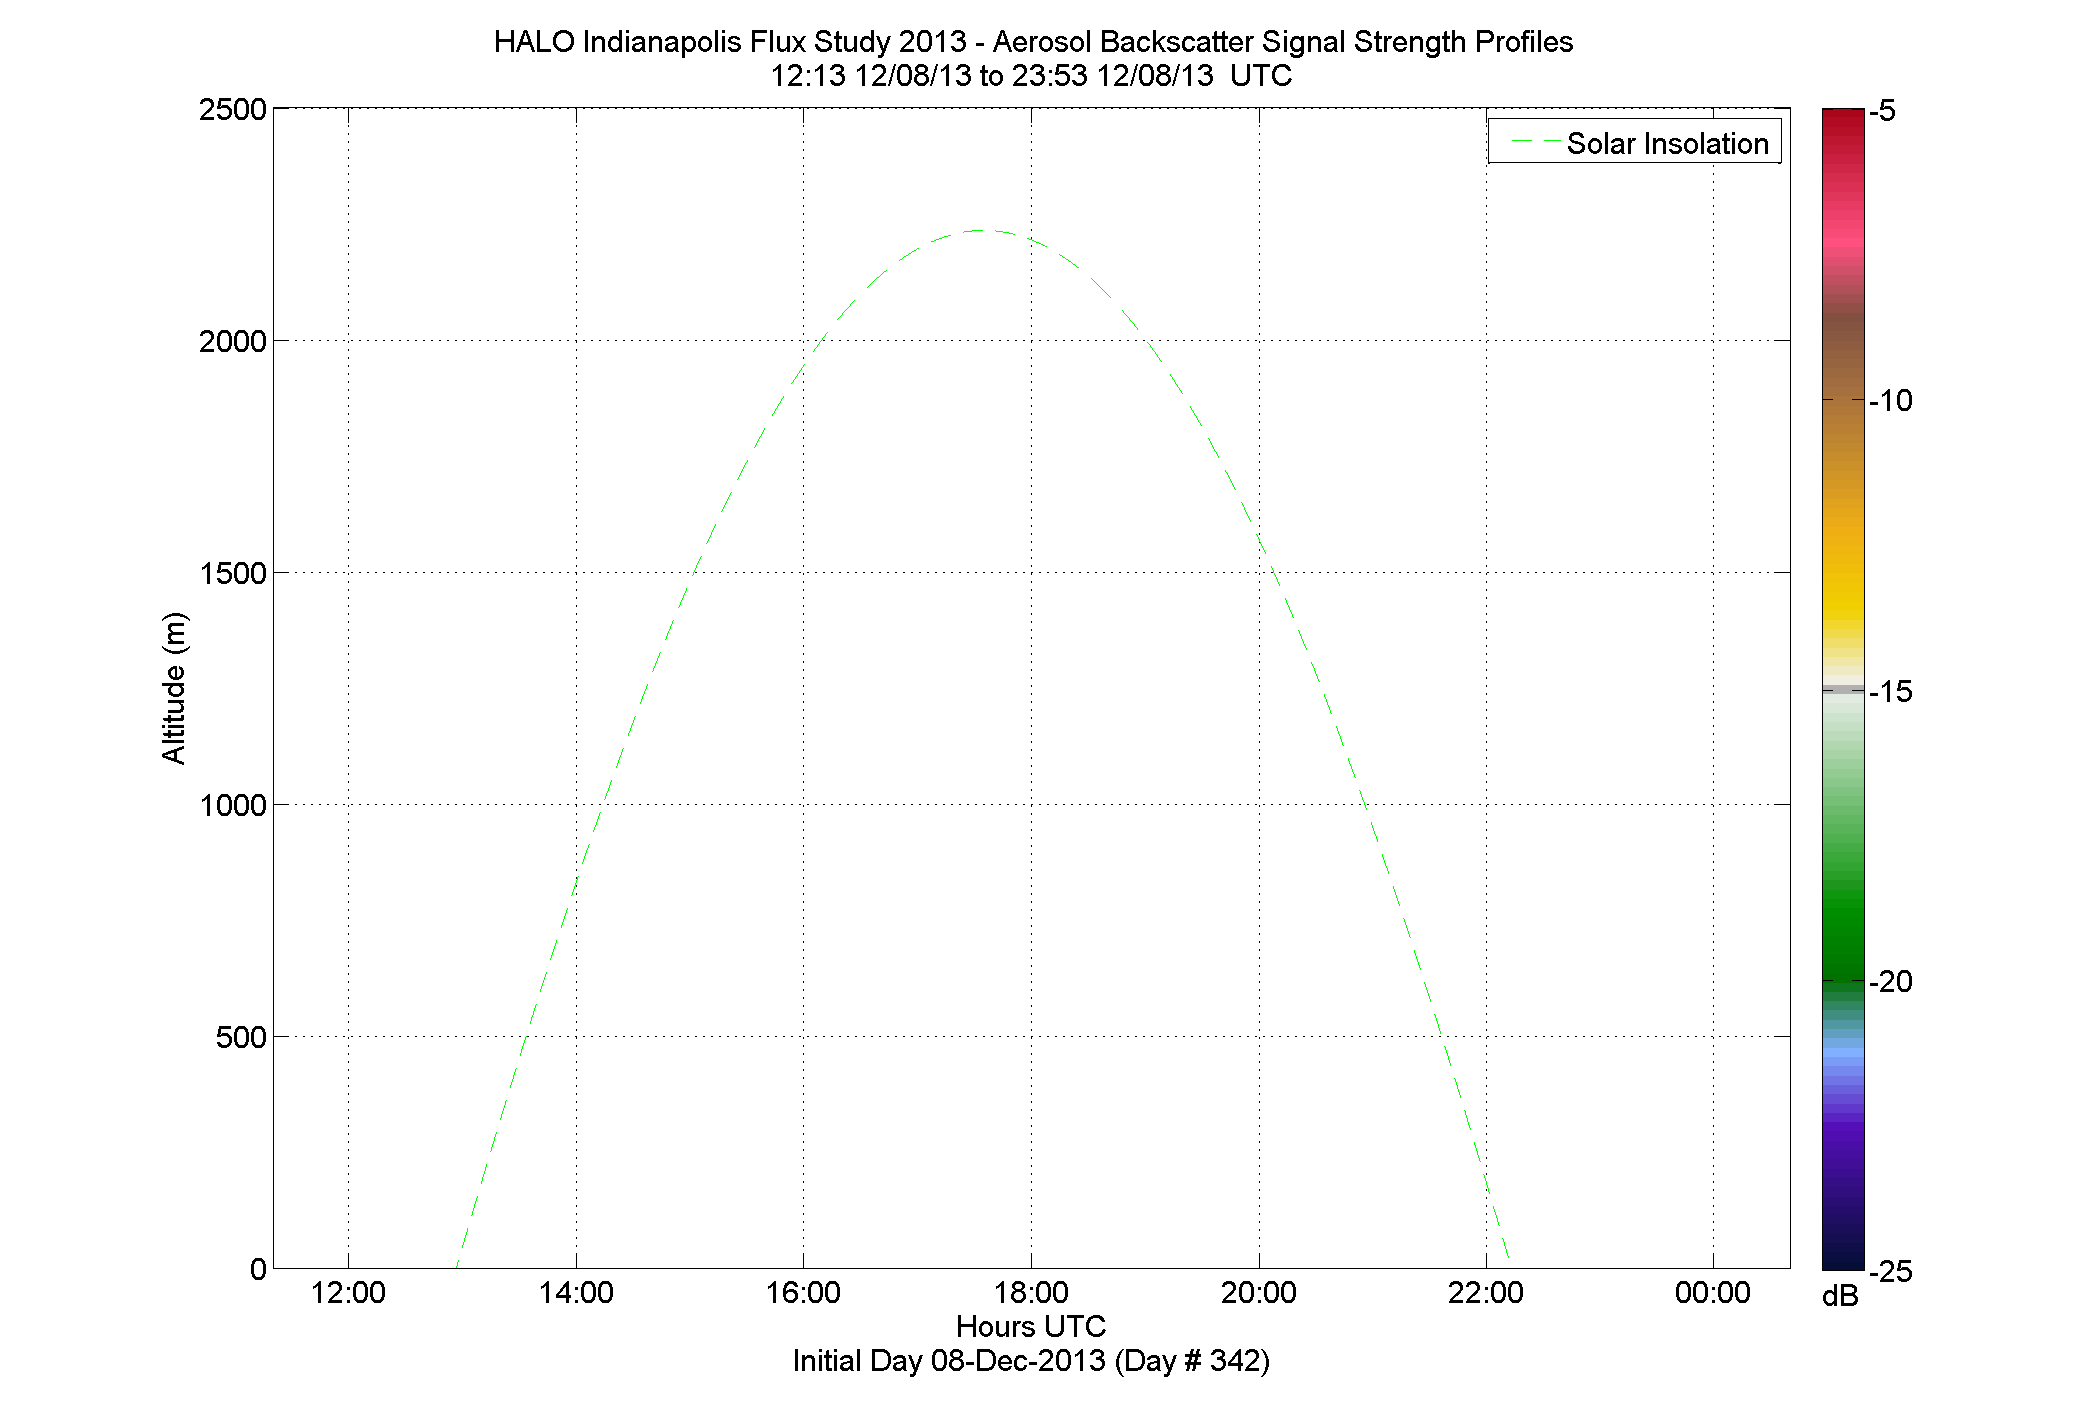 HALO aerosol backscatter signal strength profile - December 8 pm